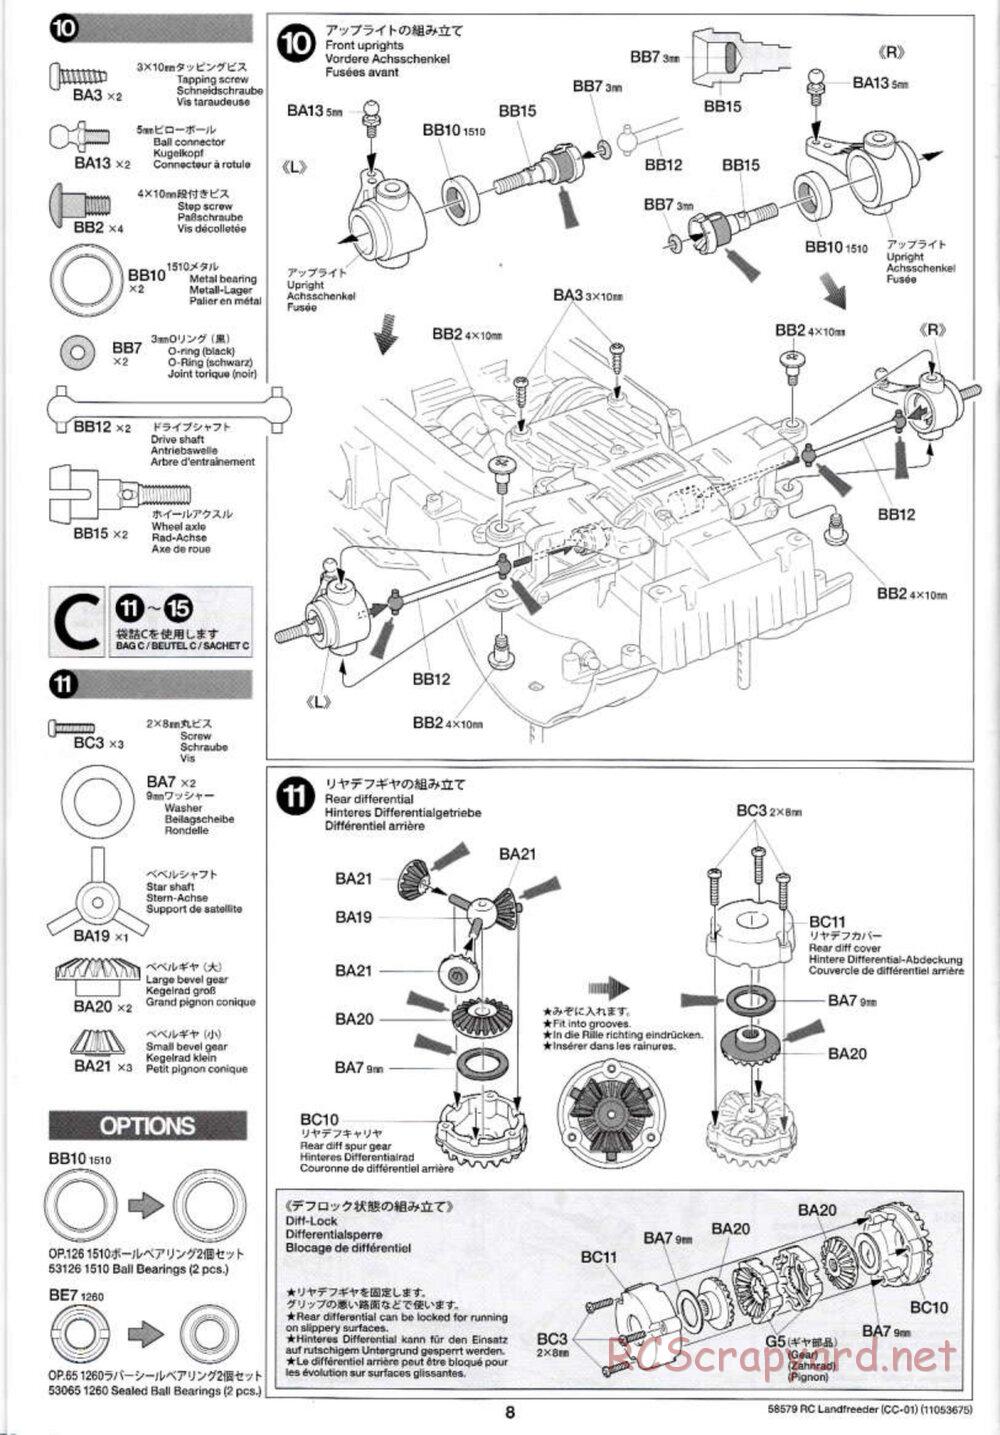 Tamiya - LandFreeder - CC-01 Chassis - Manual - Page 8